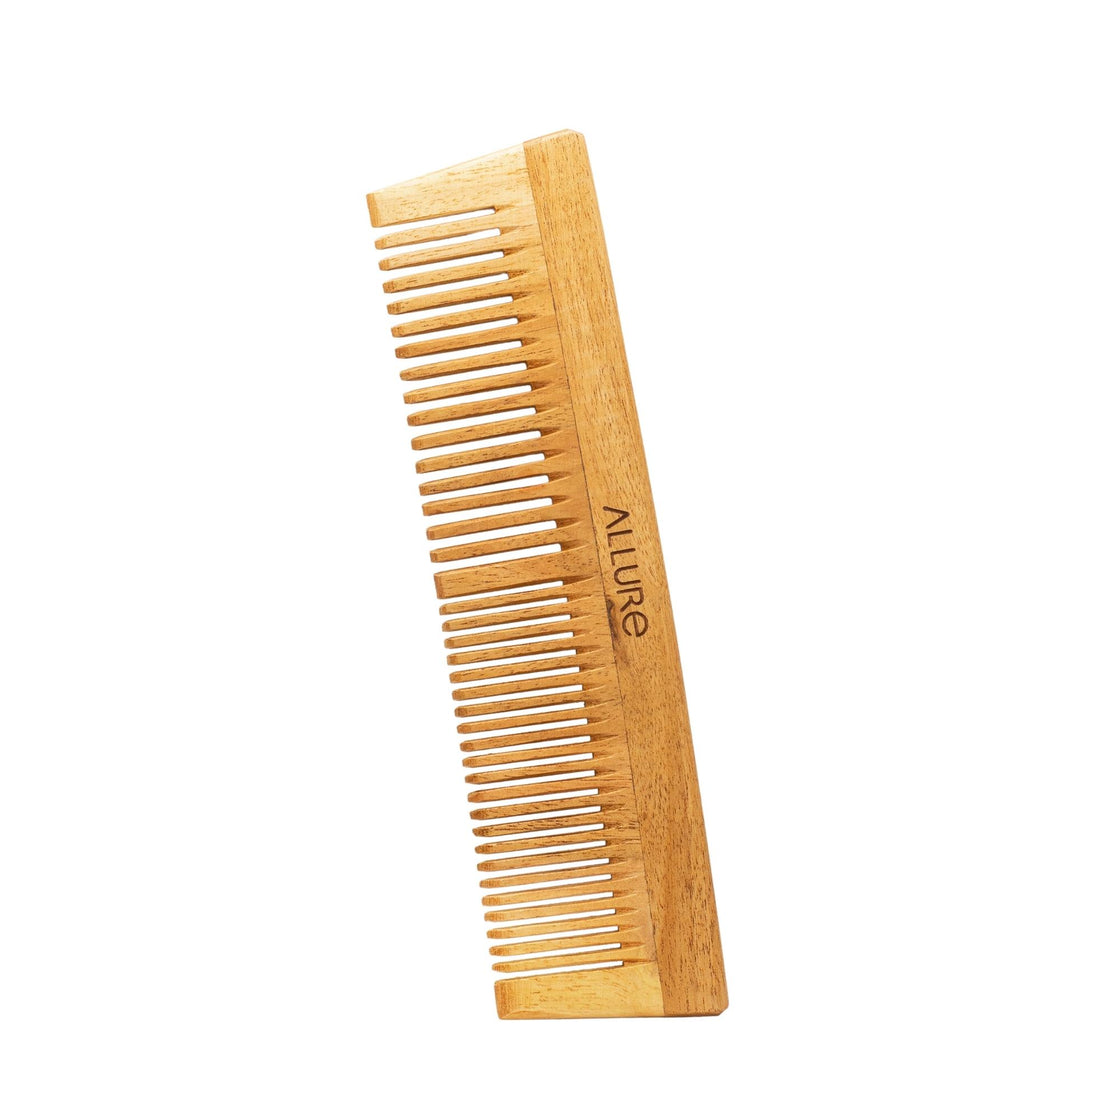 Allure Neem Wood Regular Hair Comb (CR-01)